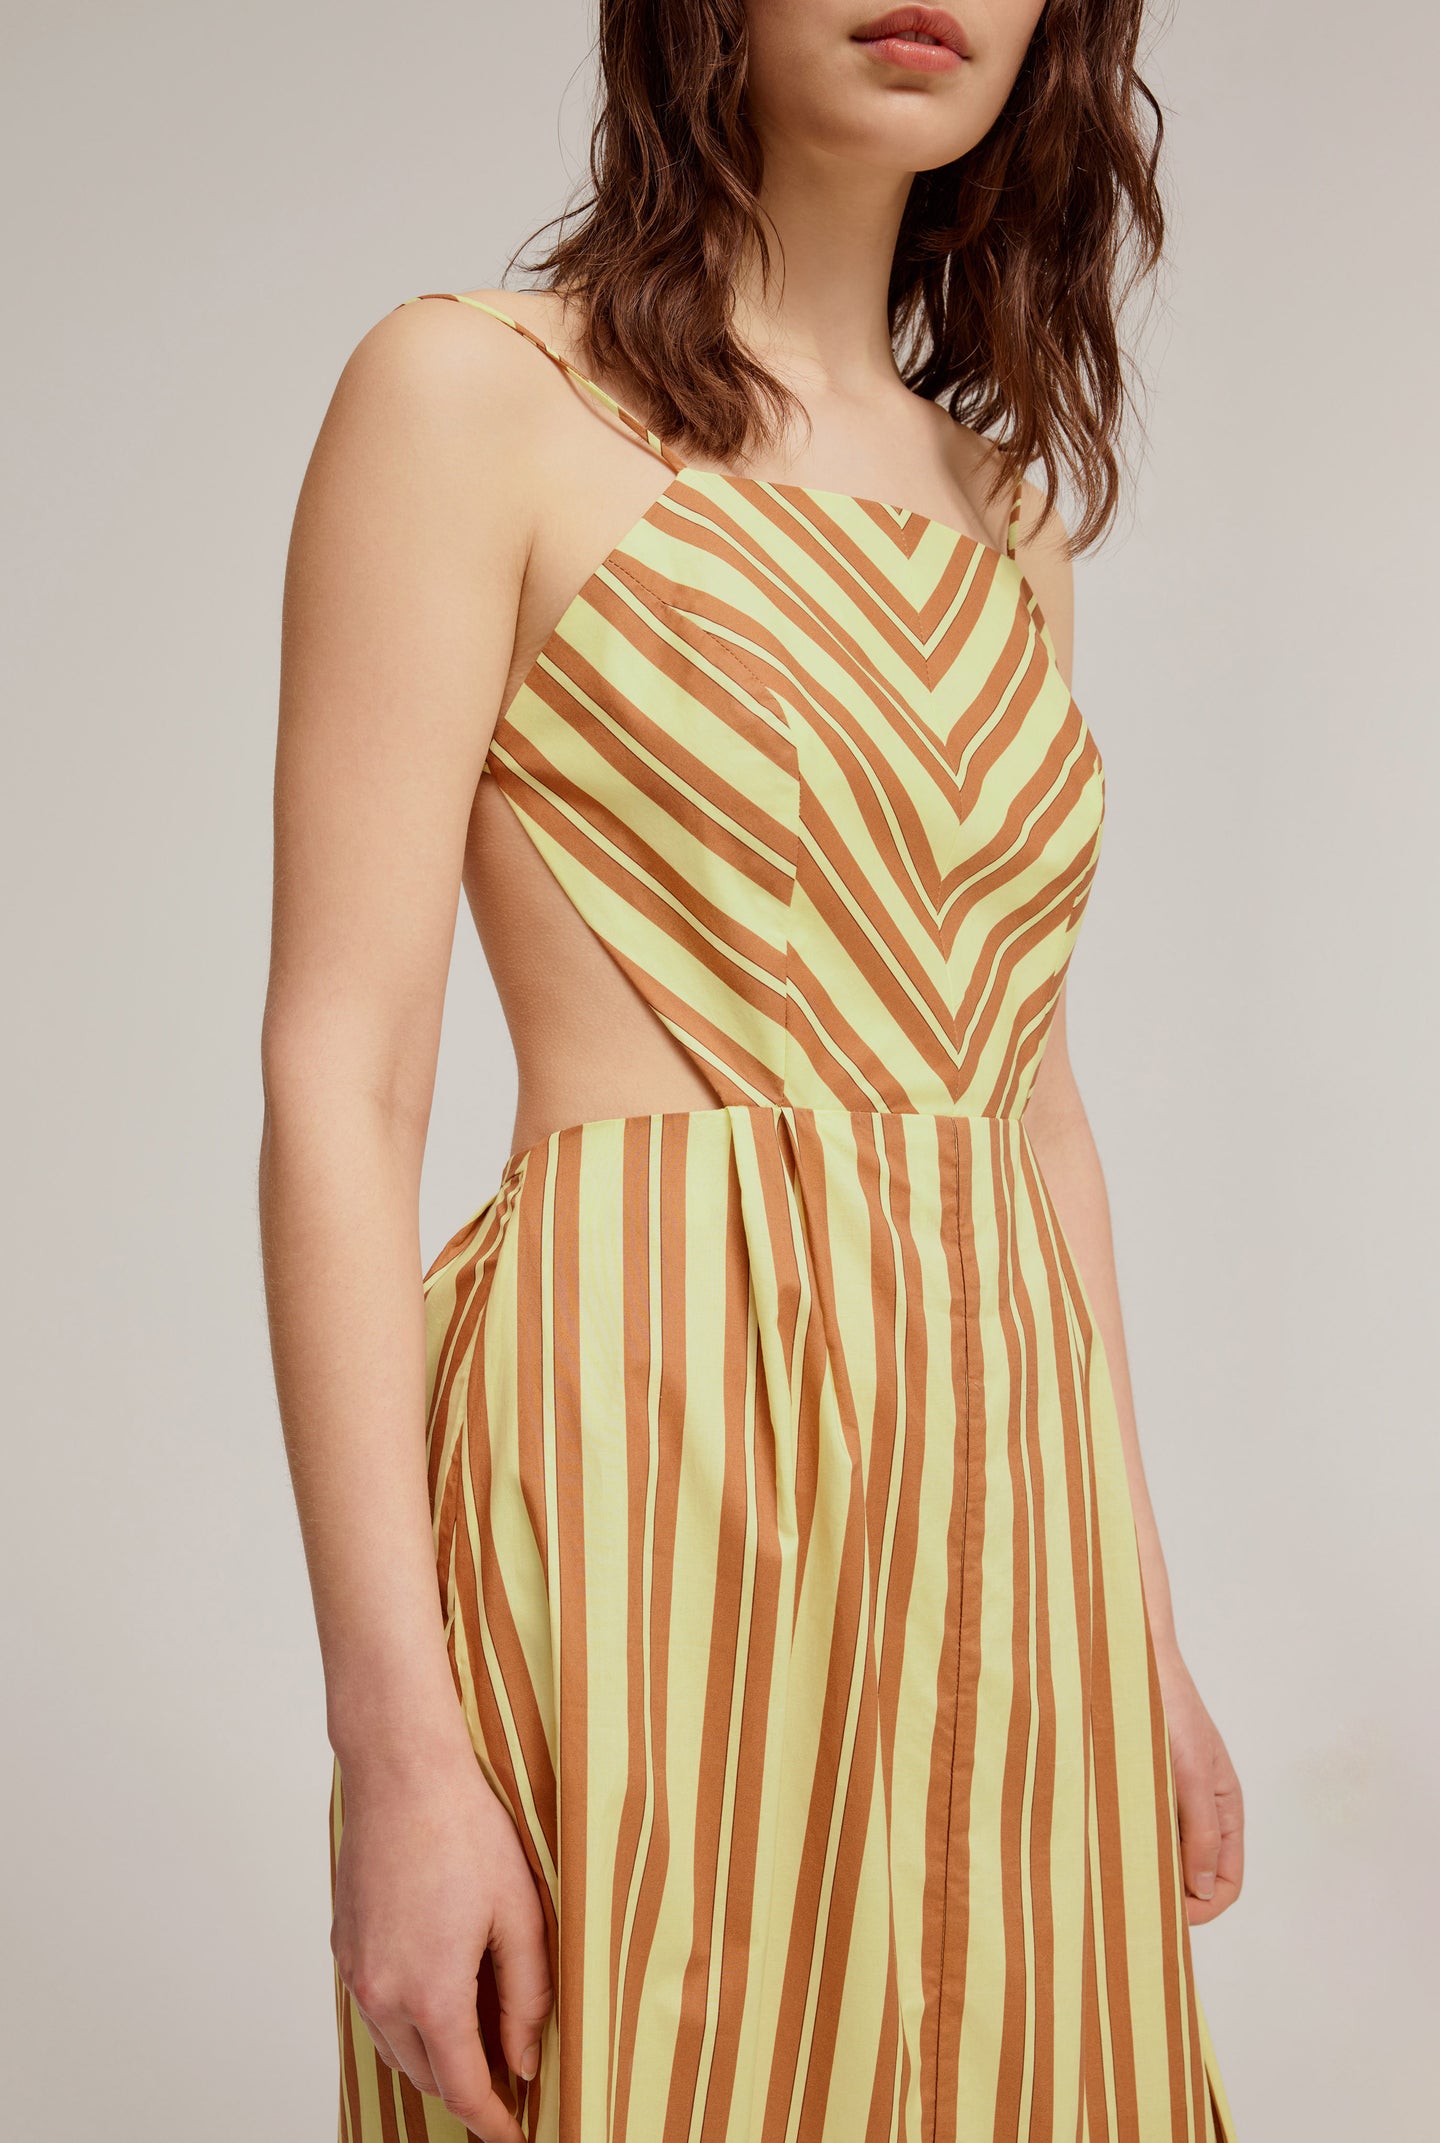 Backless Apron Maxi Dress in Yellow/Brown Stripe | Venroy